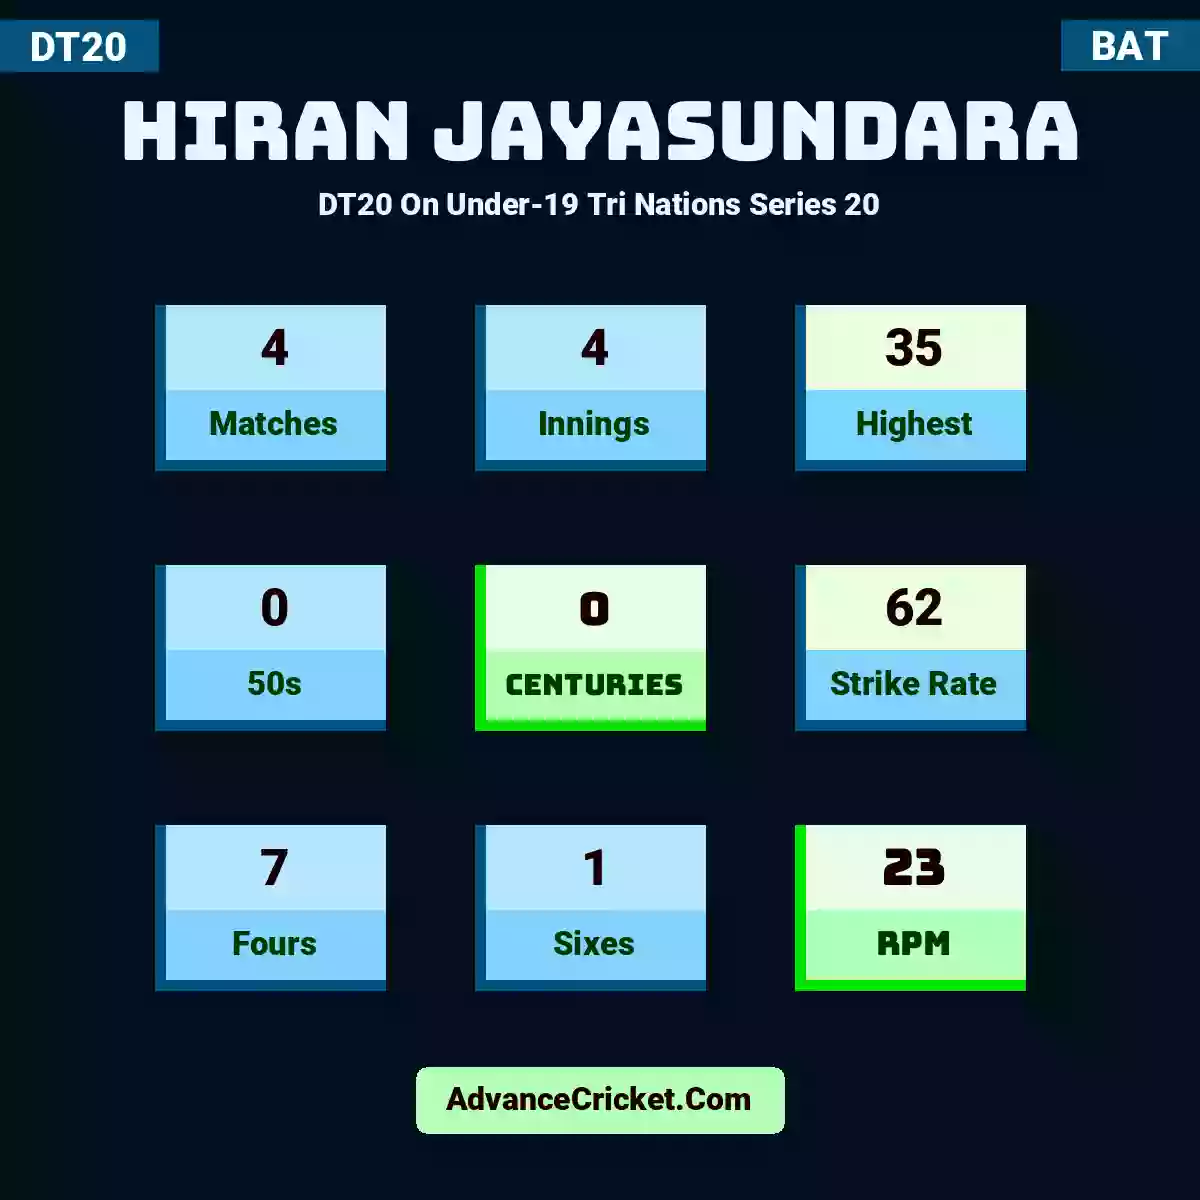 Hiran Jayasundara DT20  On Under-19 Tri Nations Series 20, Hiran Jayasundara played 4 matches, scored 35 runs as highest, 0 half-centuries, and 0 centuries, with a strike rate of 62. H.Jayasundara hit 7 fours and 1 sixes, with an RPM of 23.